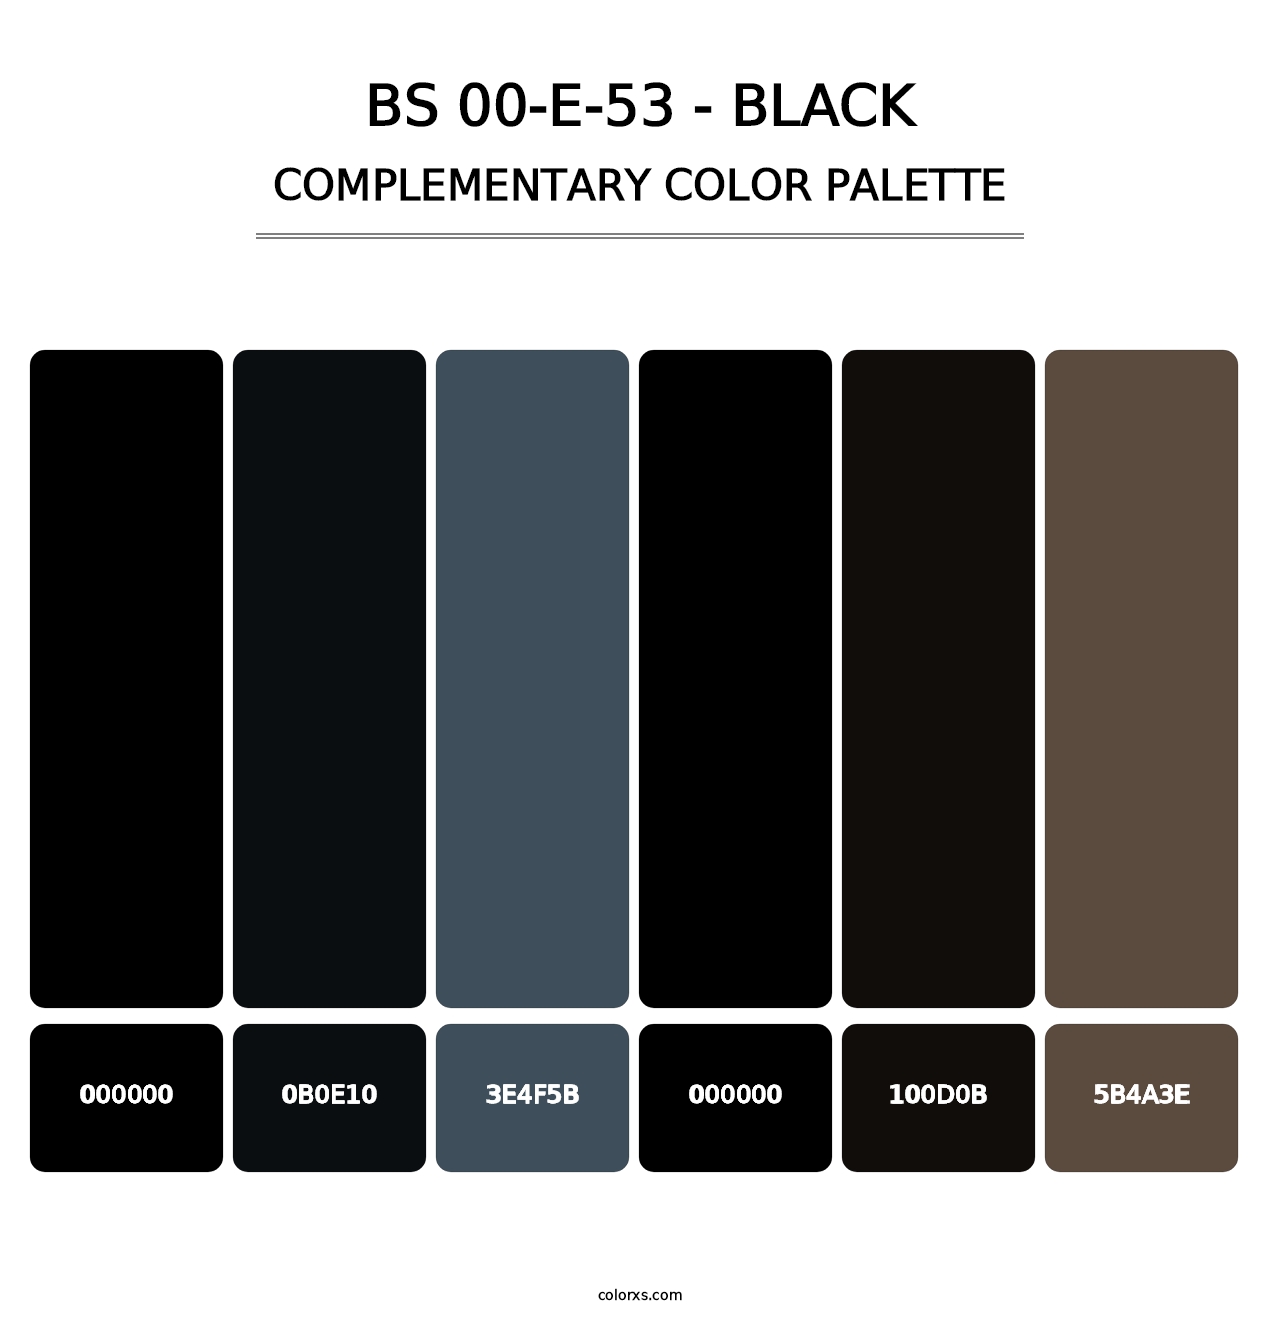 BS 00-E-53 - Black - Complementary Color Palette